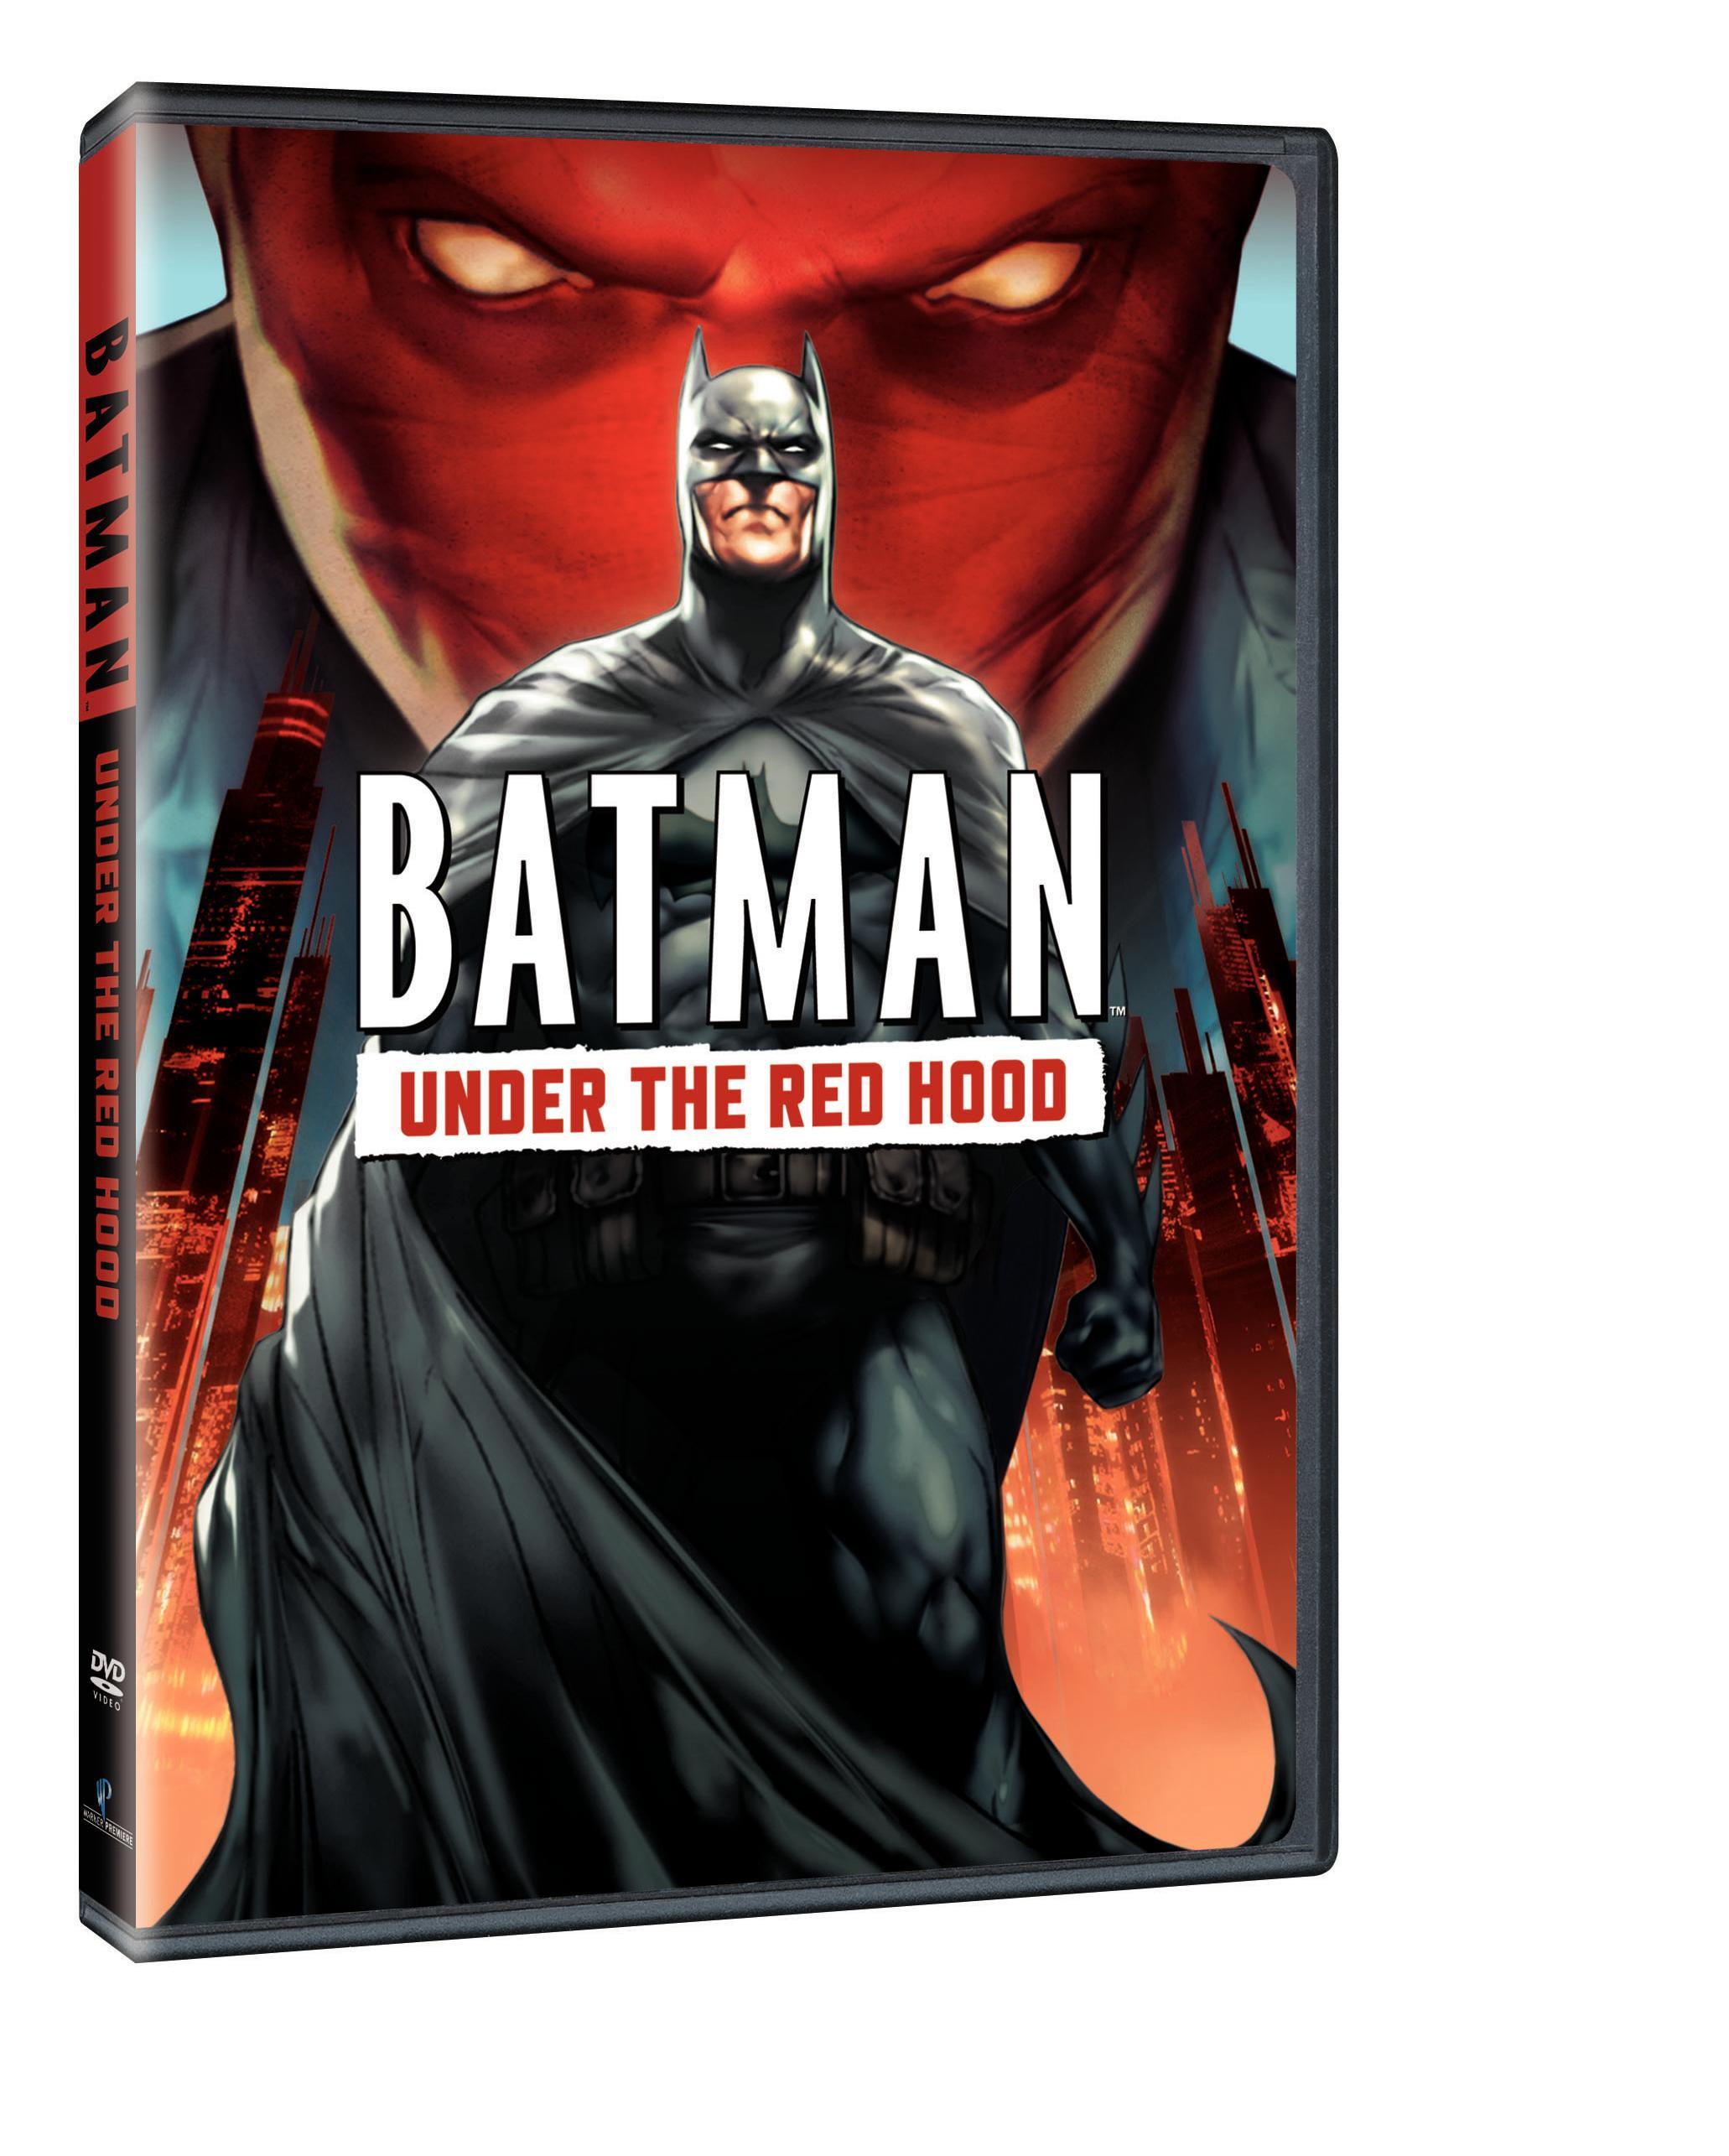 Review #1: Batman: Under the Red Hood - The Batman Universe